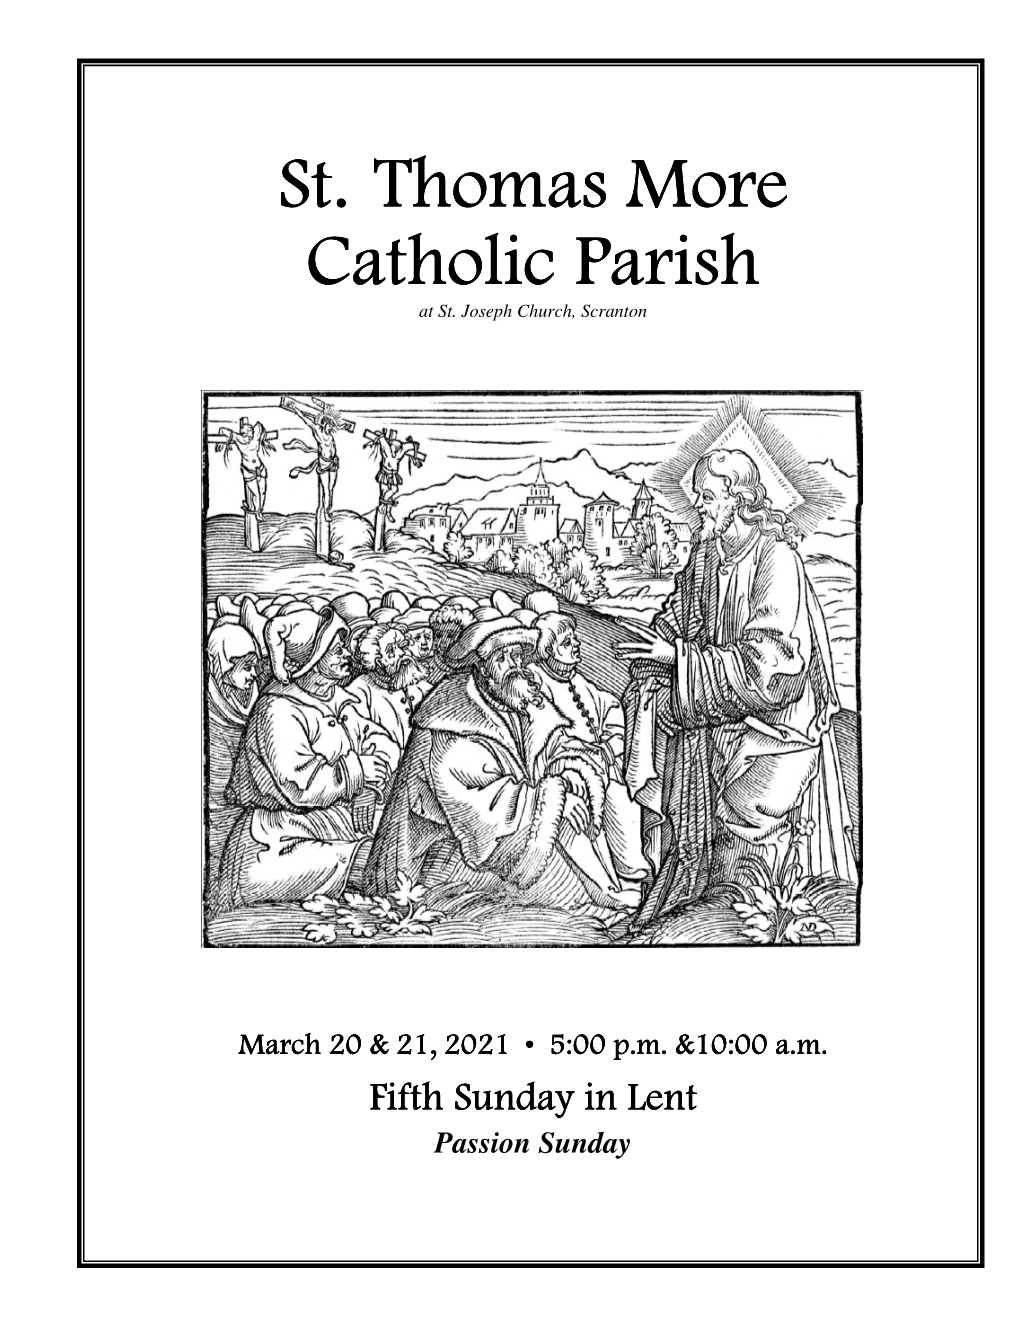 St. Thomas More Thomas More Catholic Parish Catholic Parish